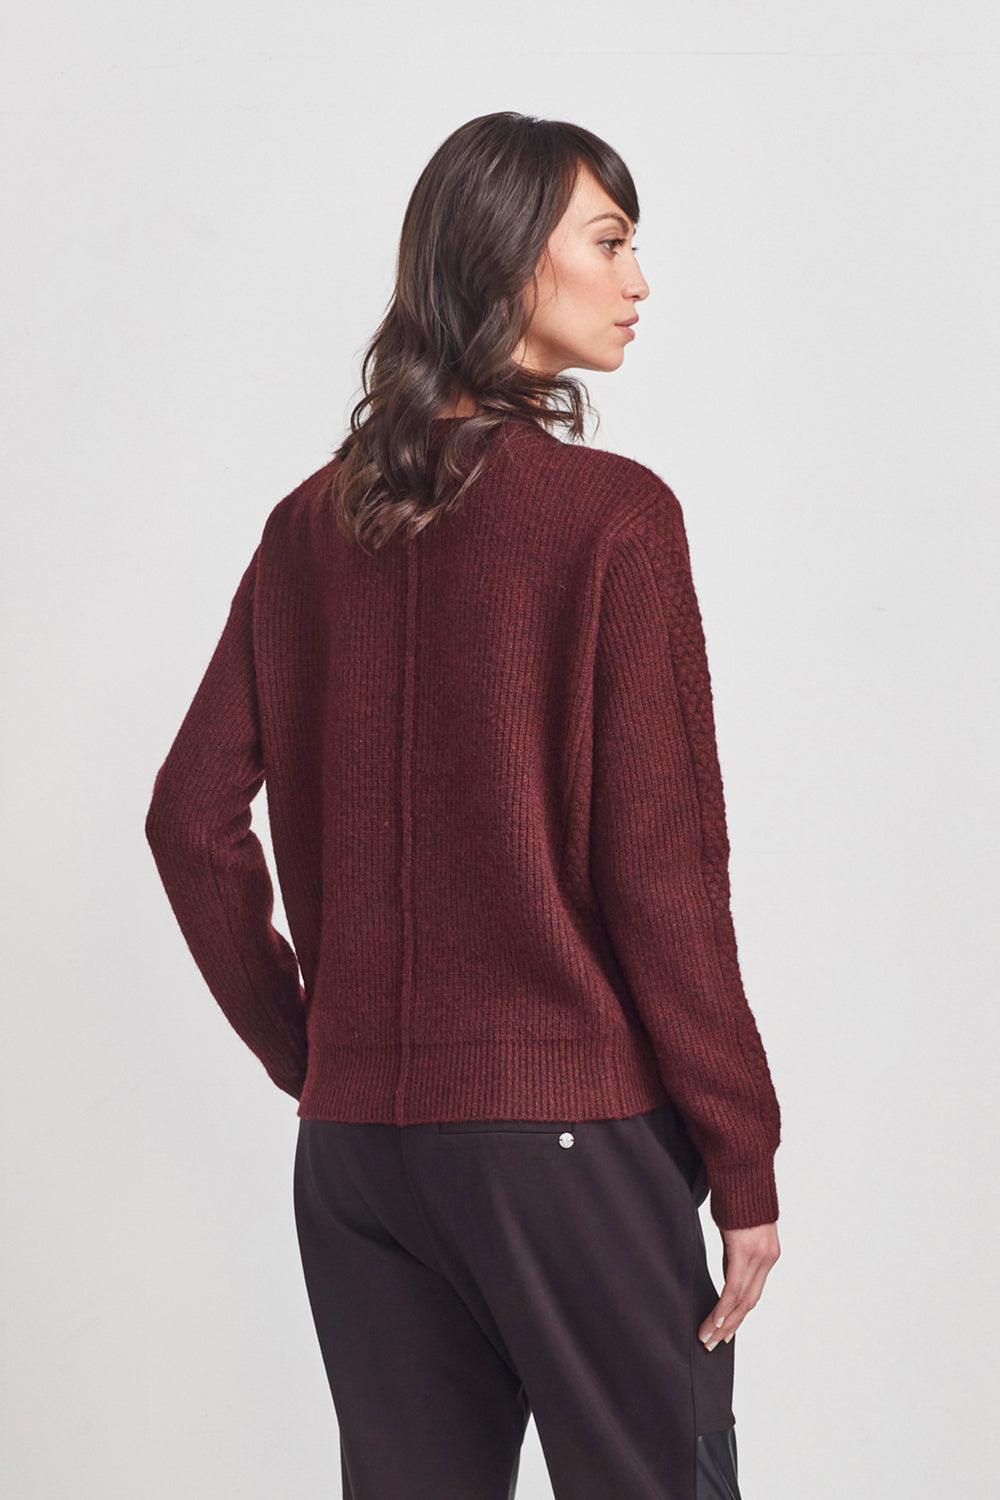 Deliver Sweater - Merlot - Sweater VERGE